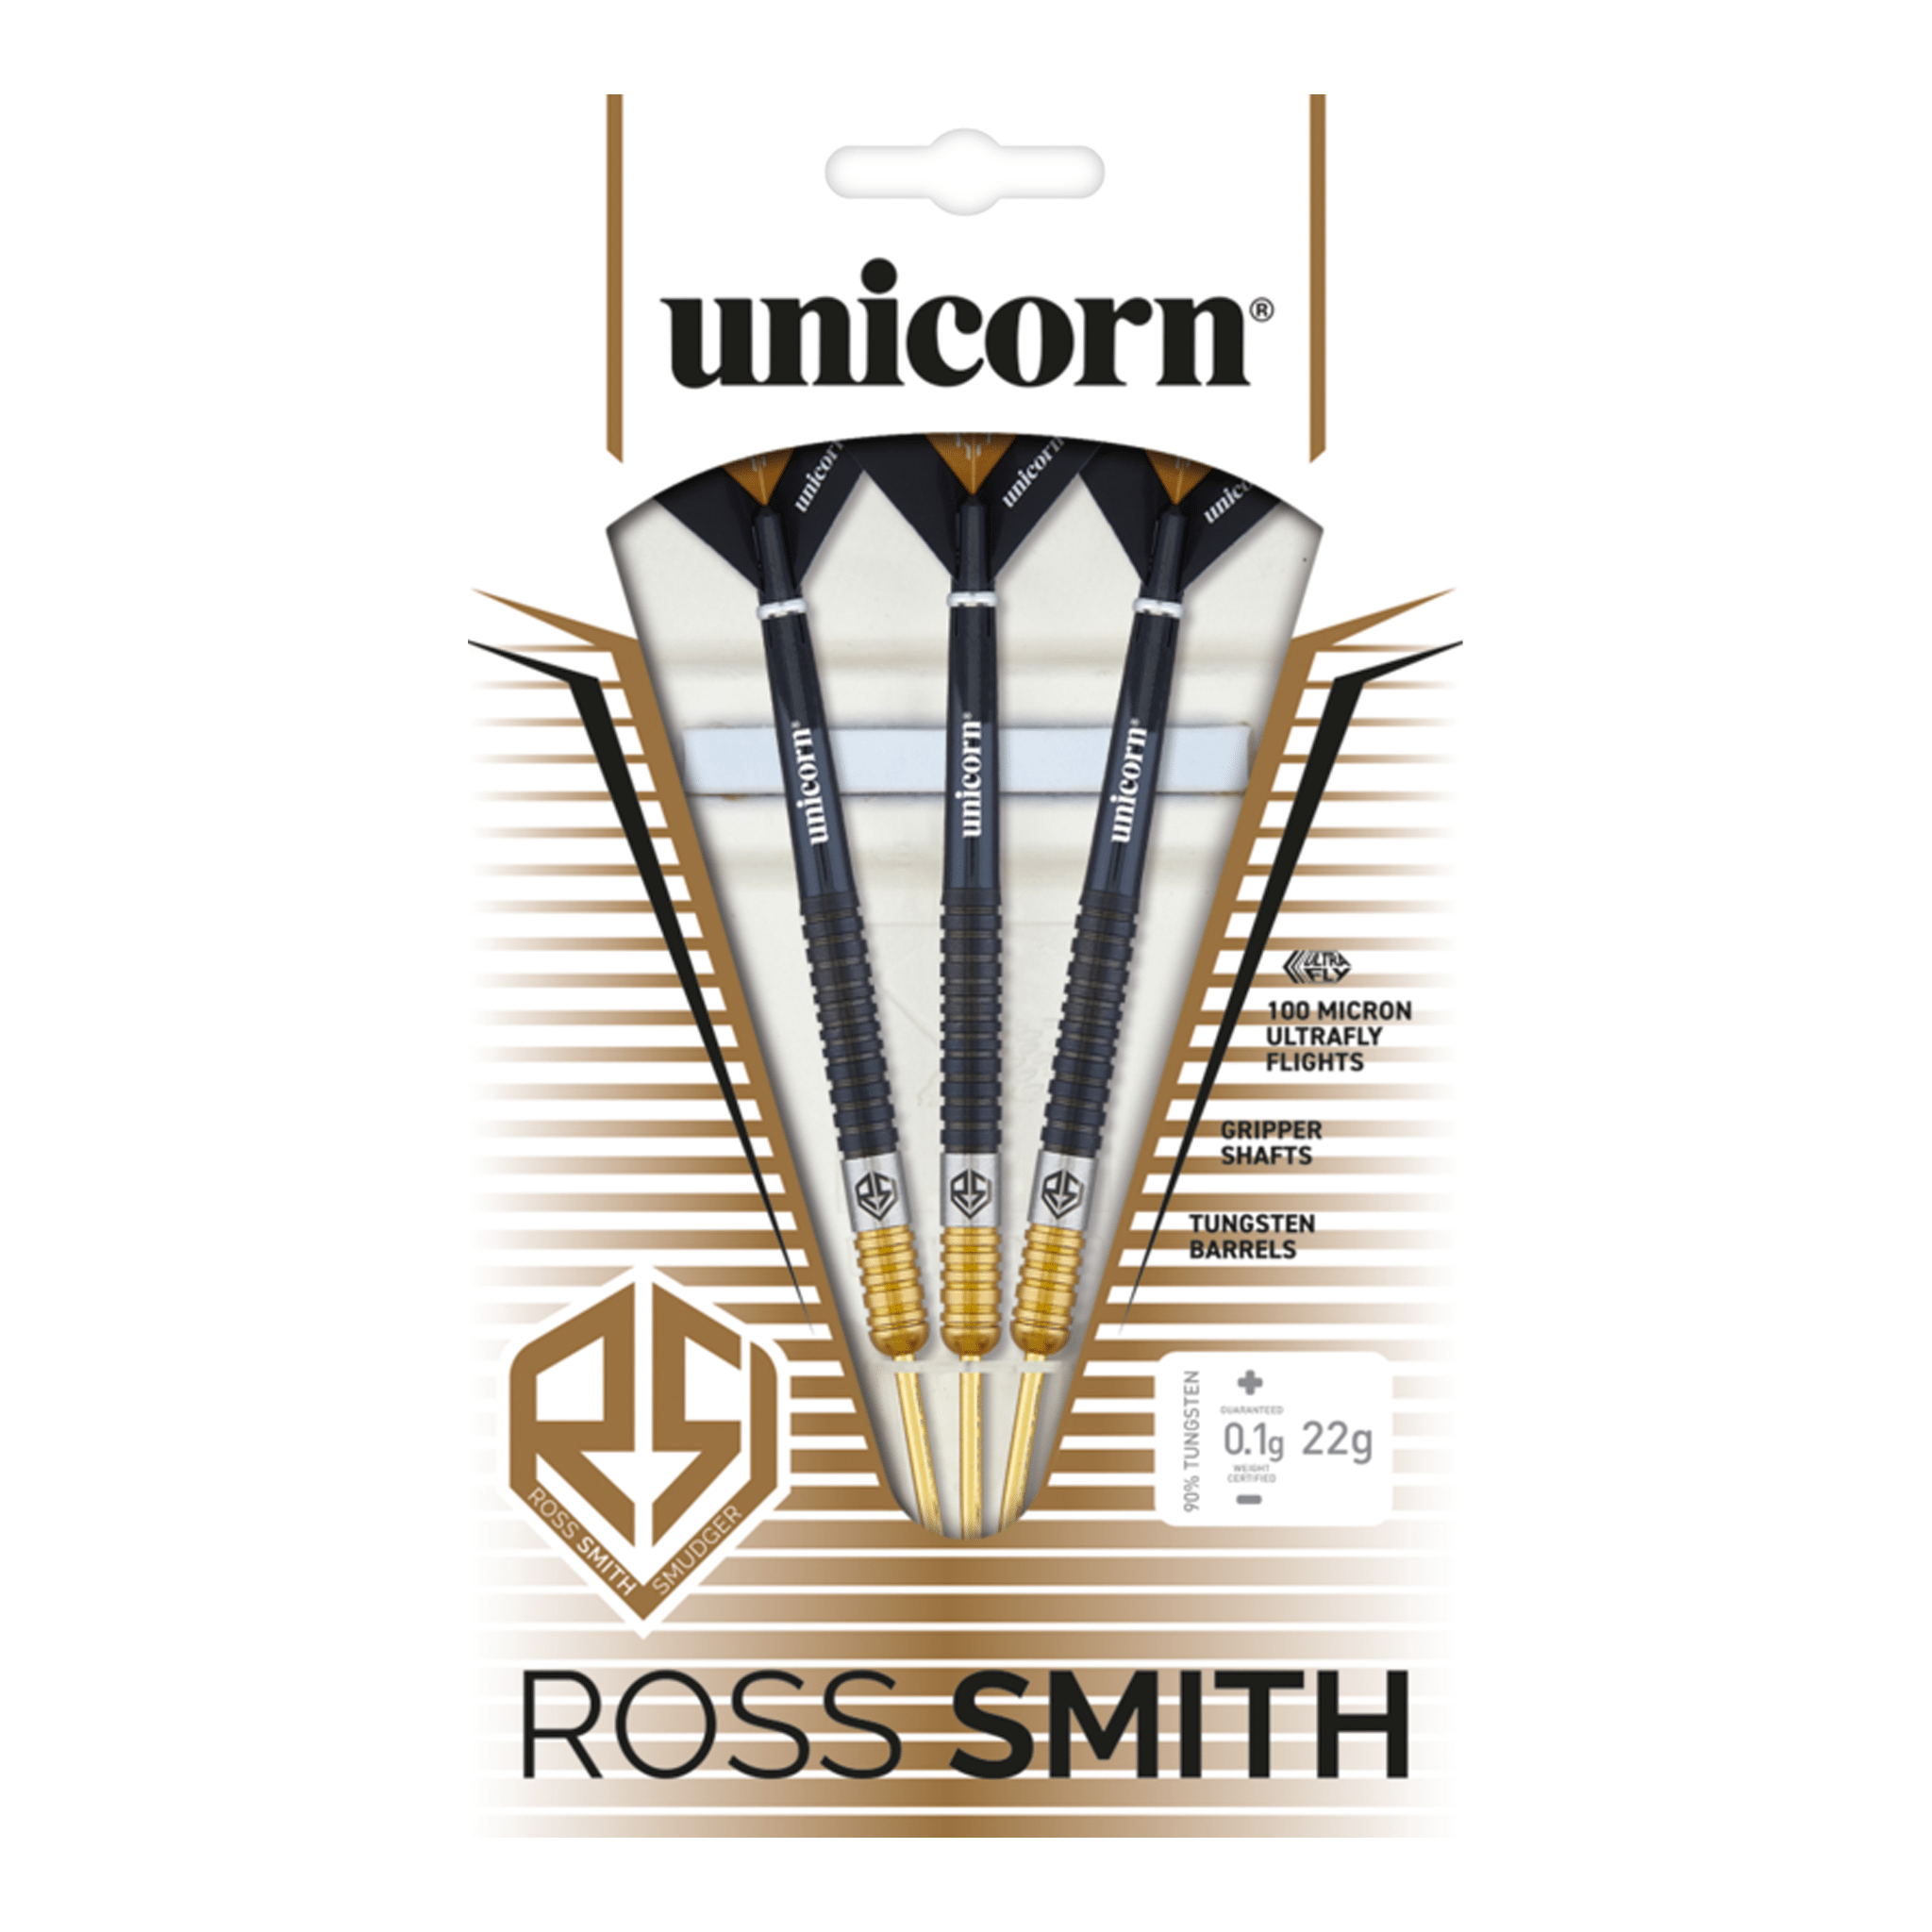 Unicorn Ross Smith Two-Tone - 90% Tungsten Steel Tip Darts Darts